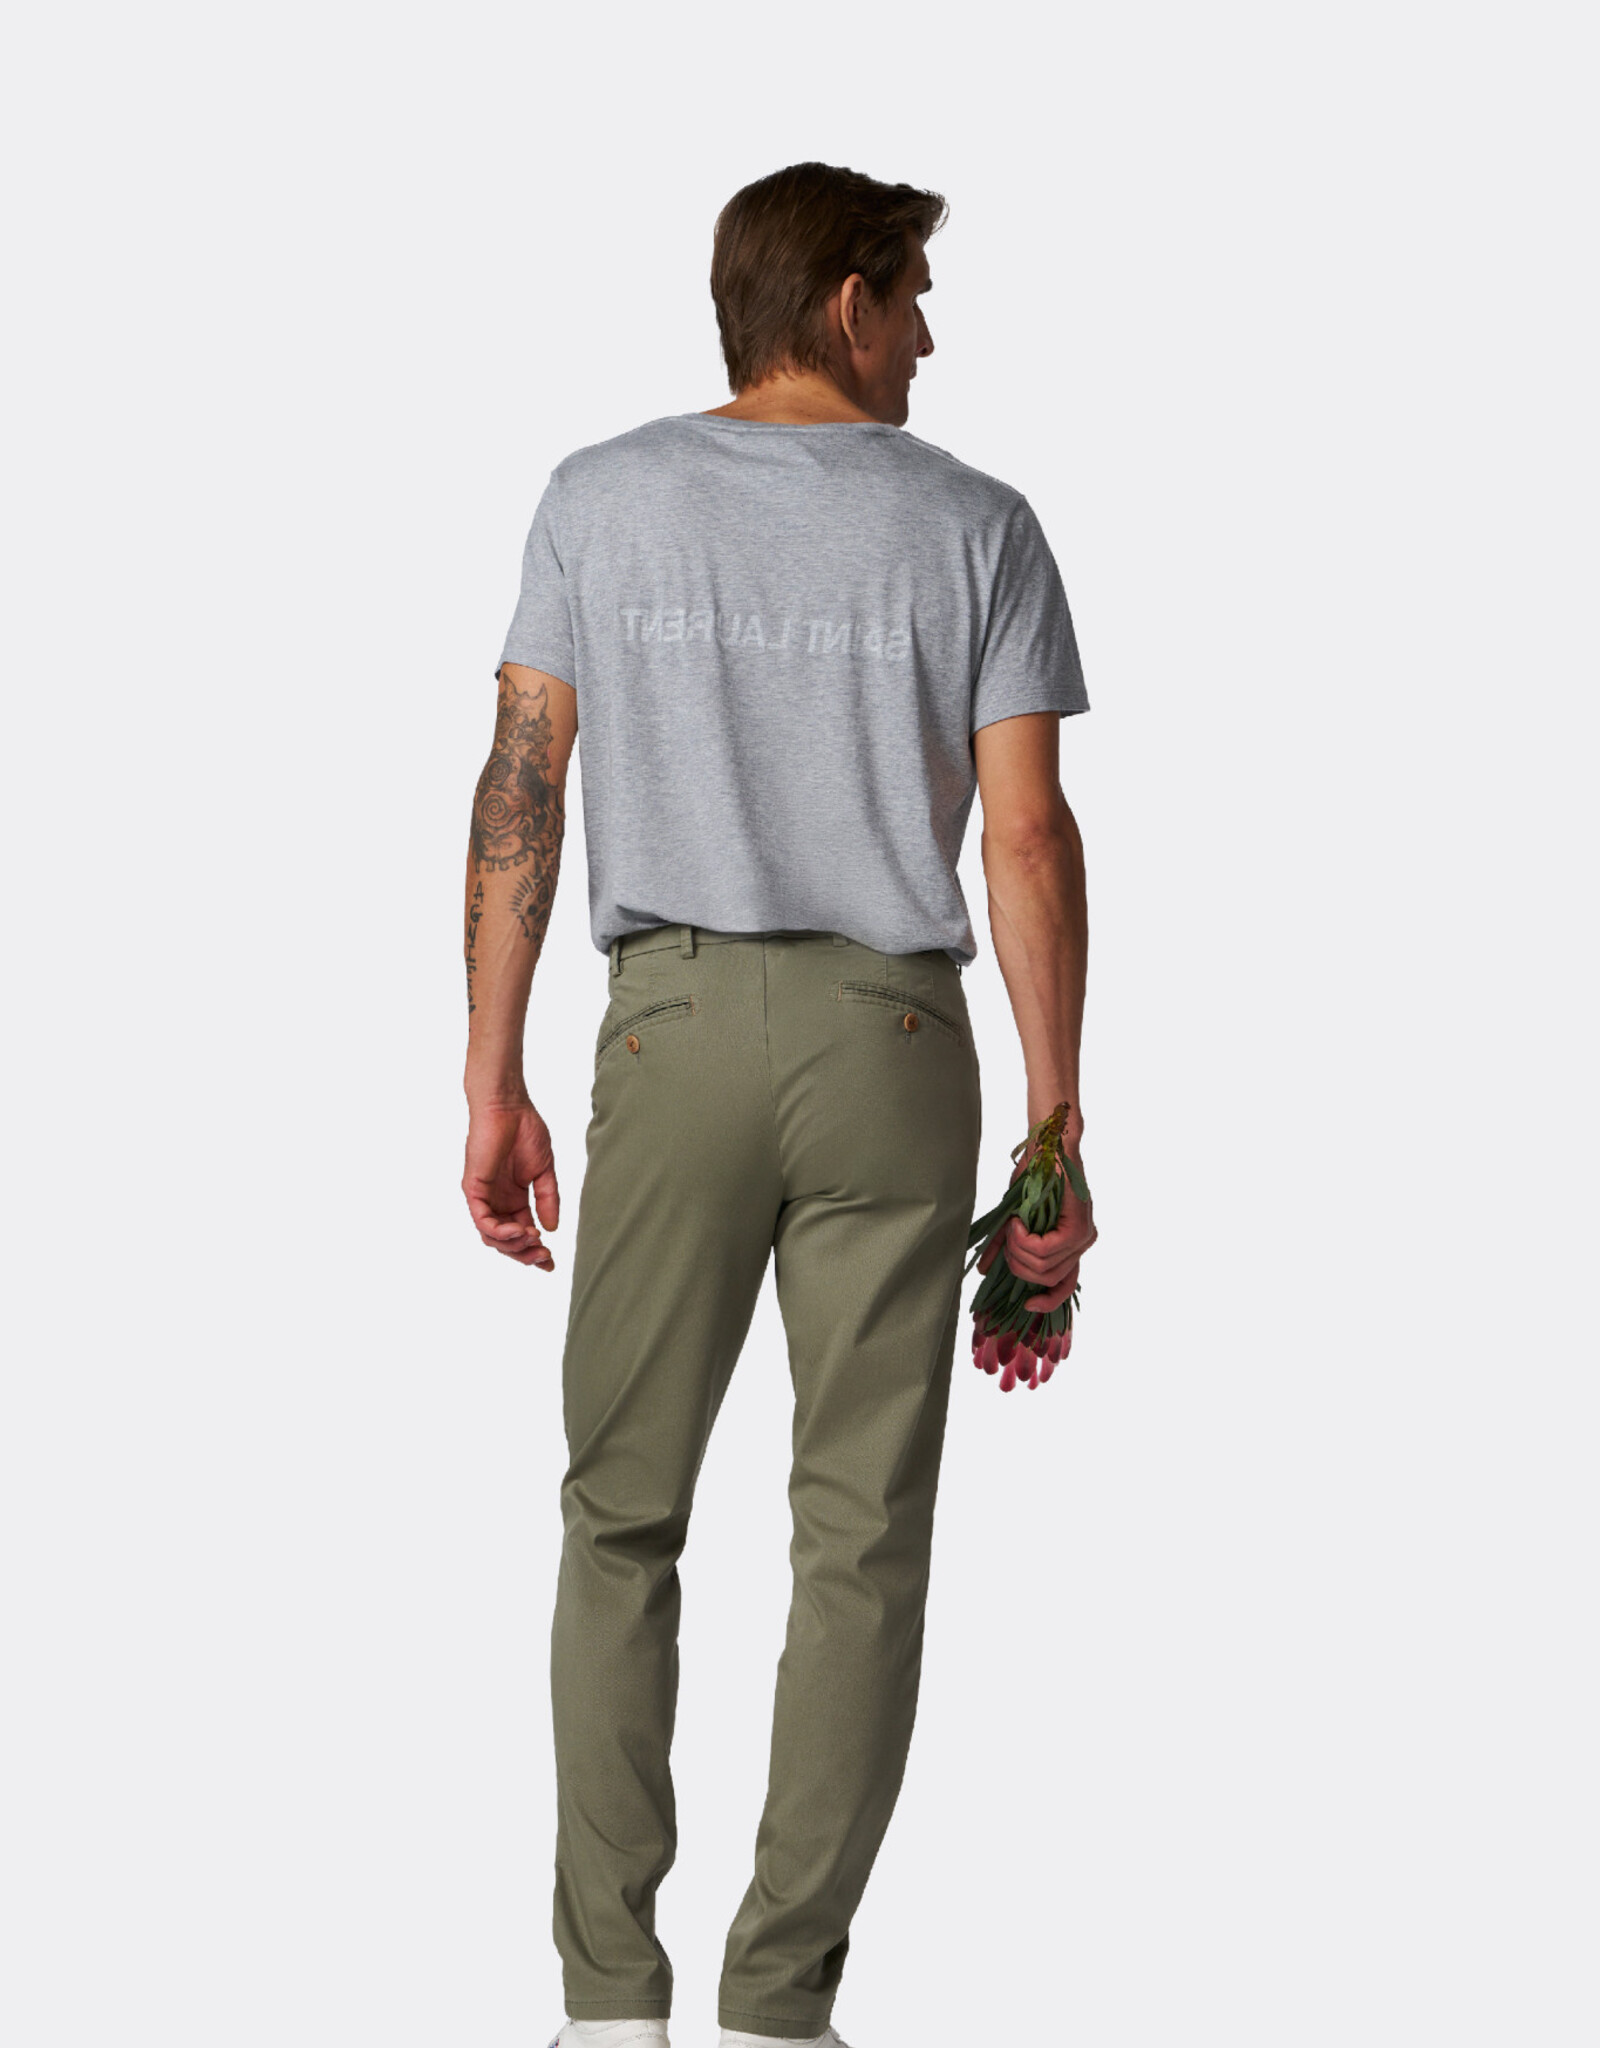 MMX MMX trousers cotton green Lupus 7380/26